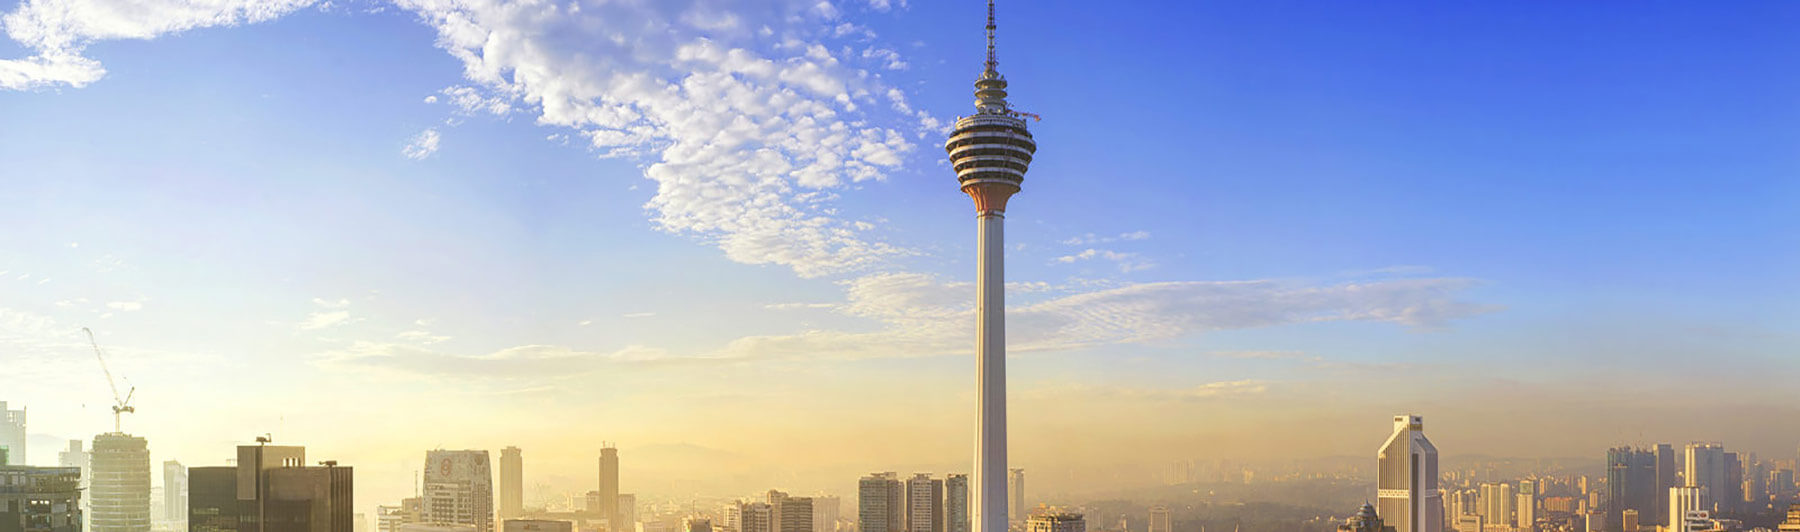 Menara KL Tower, Malaysia